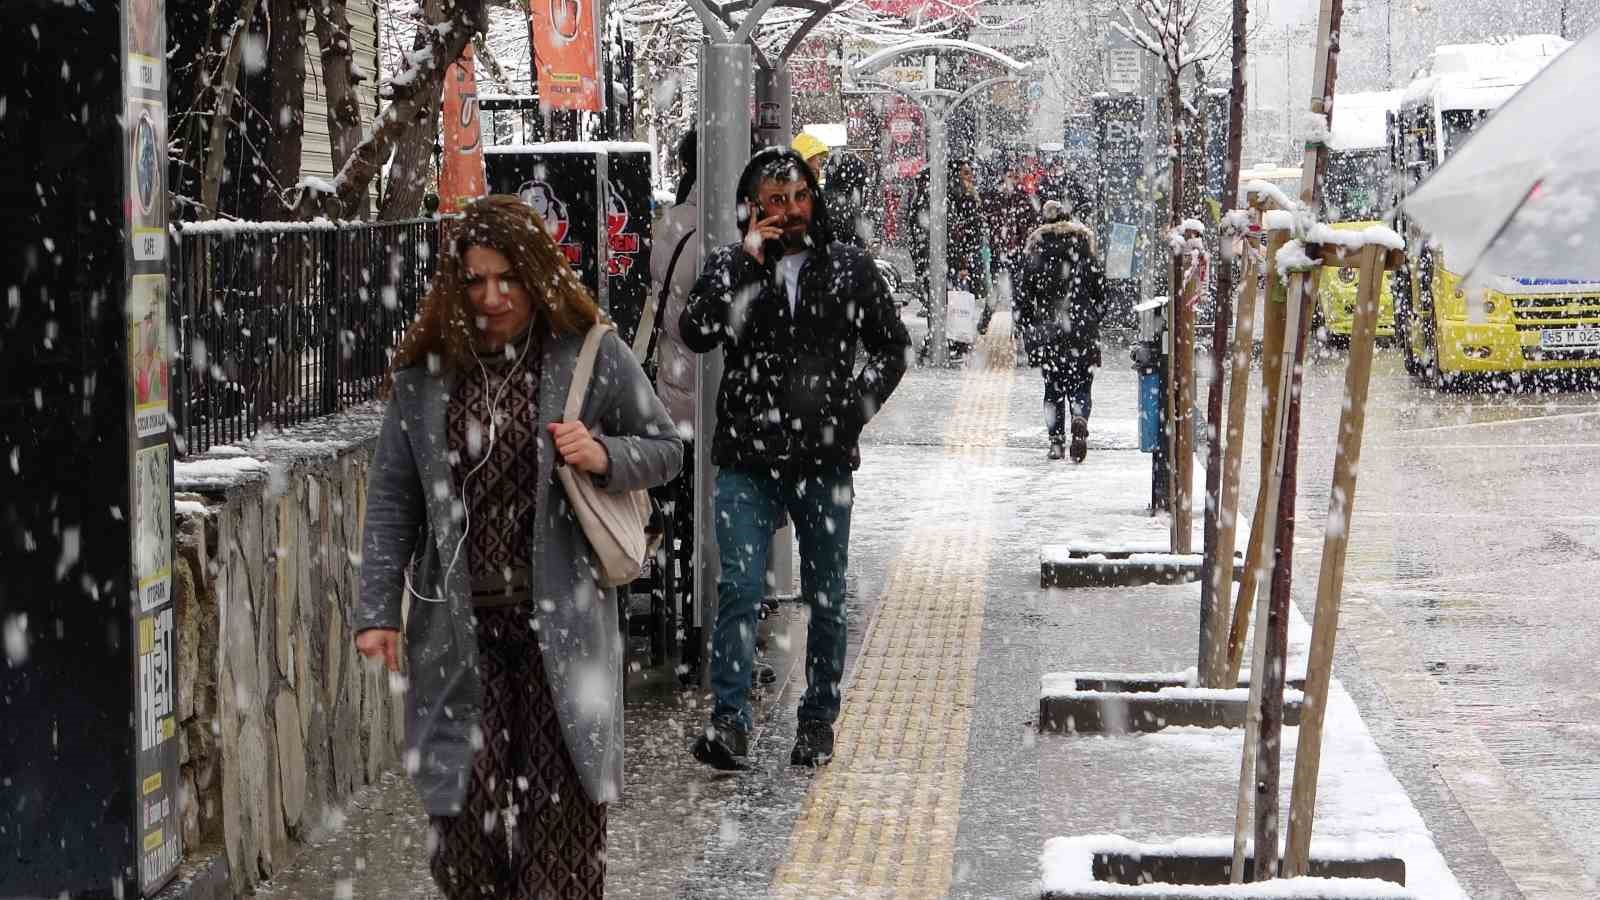 Van’da kar yağışı: 78 yol ulaşıma kapandı